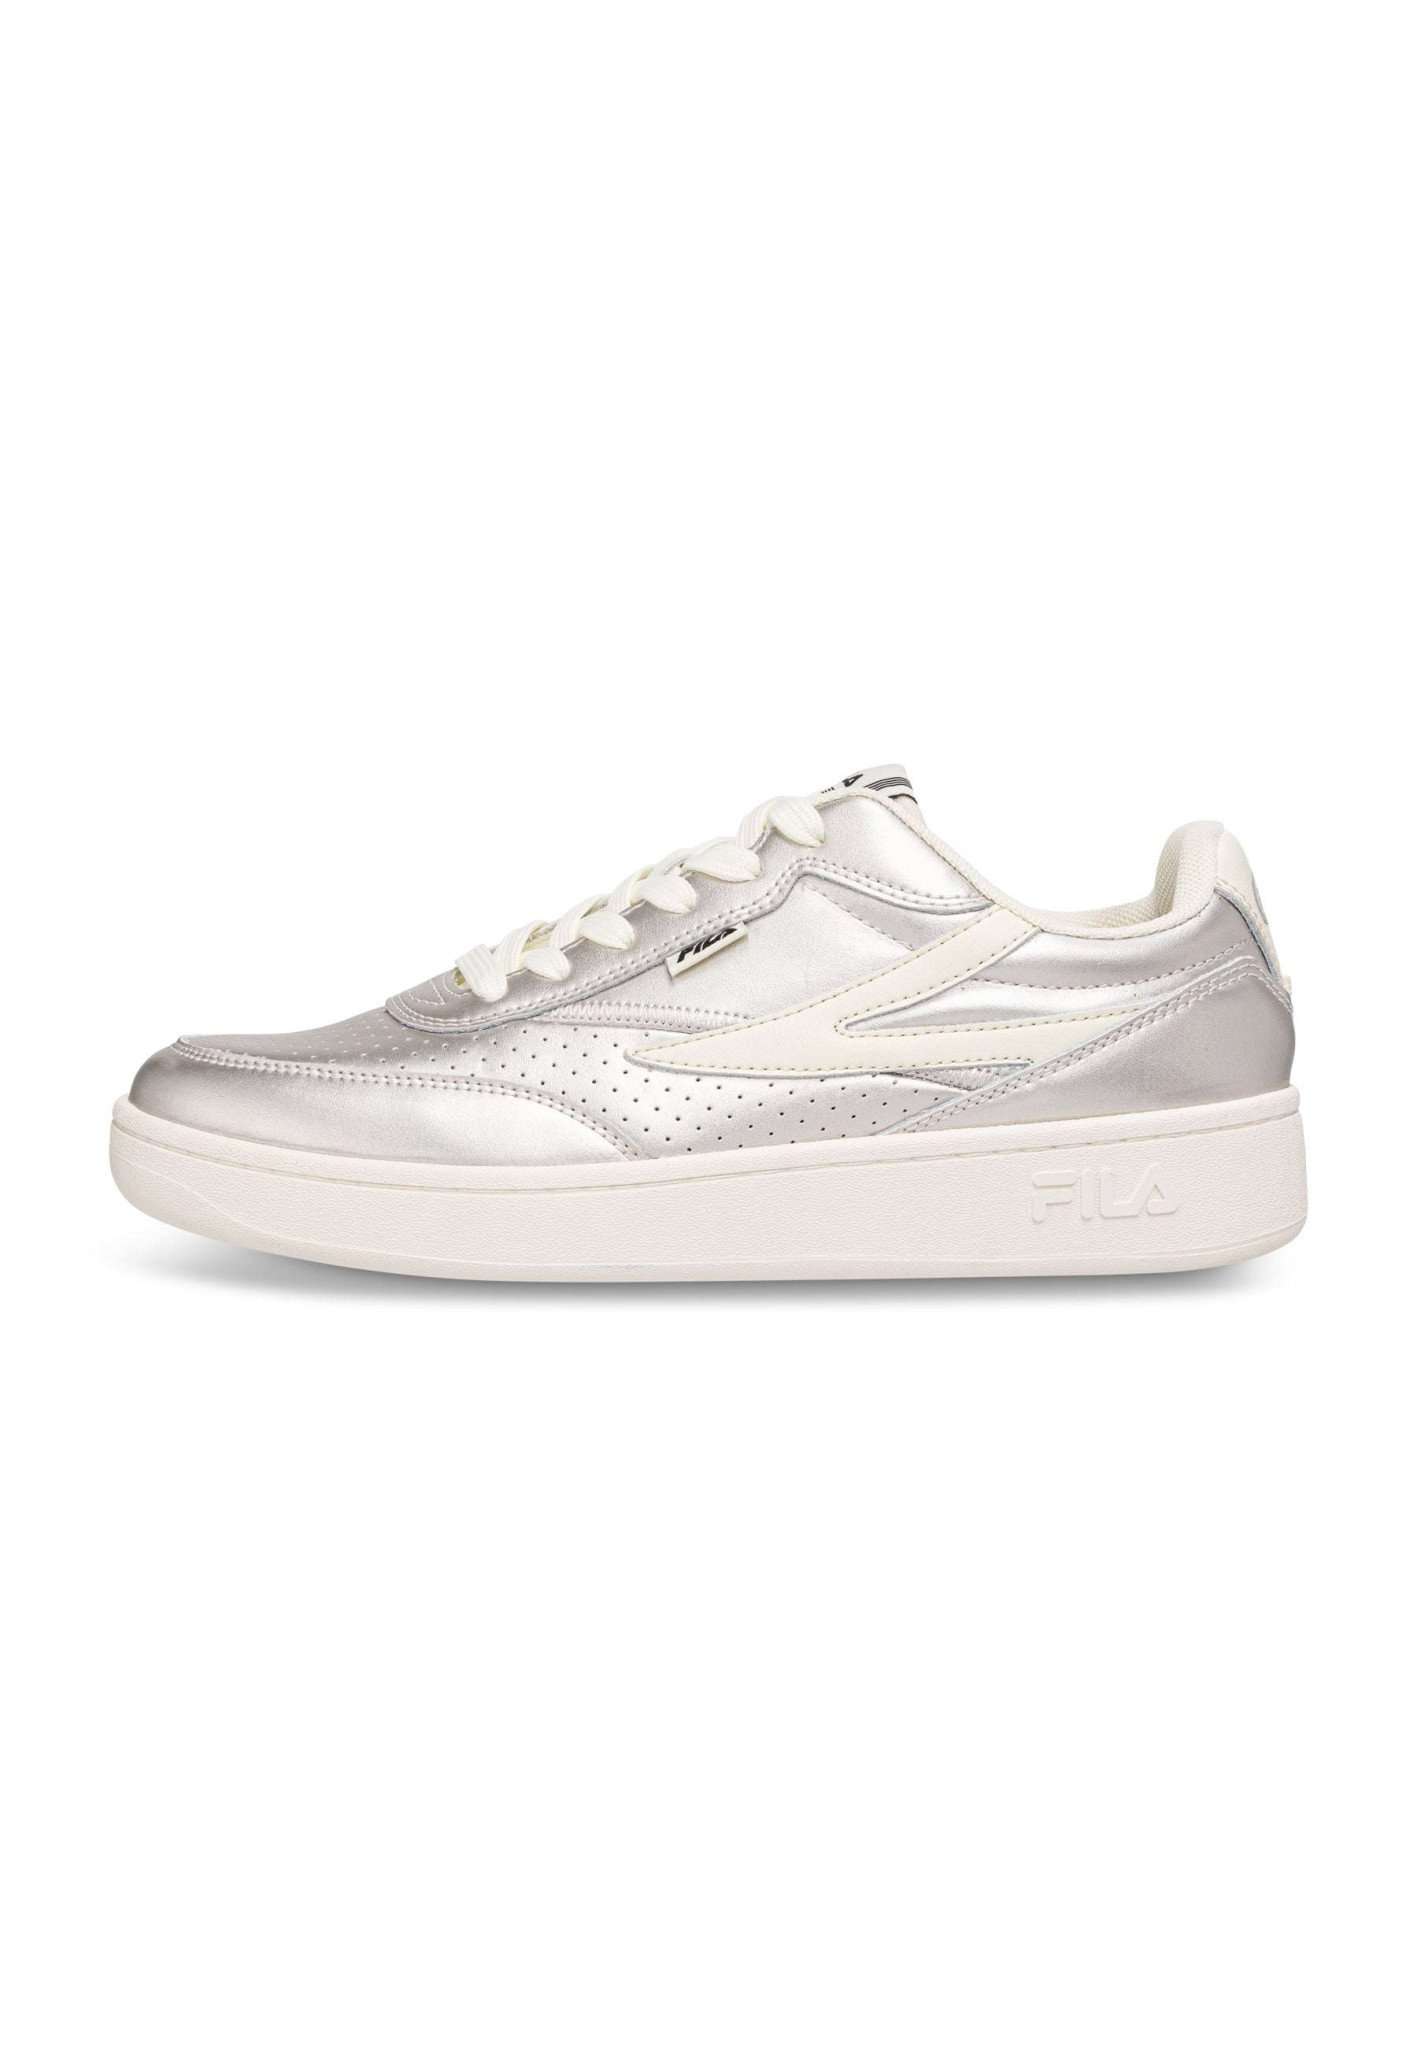 Fila Sevaro F Wm in Silver-Marshmallow Sneakers Fila   